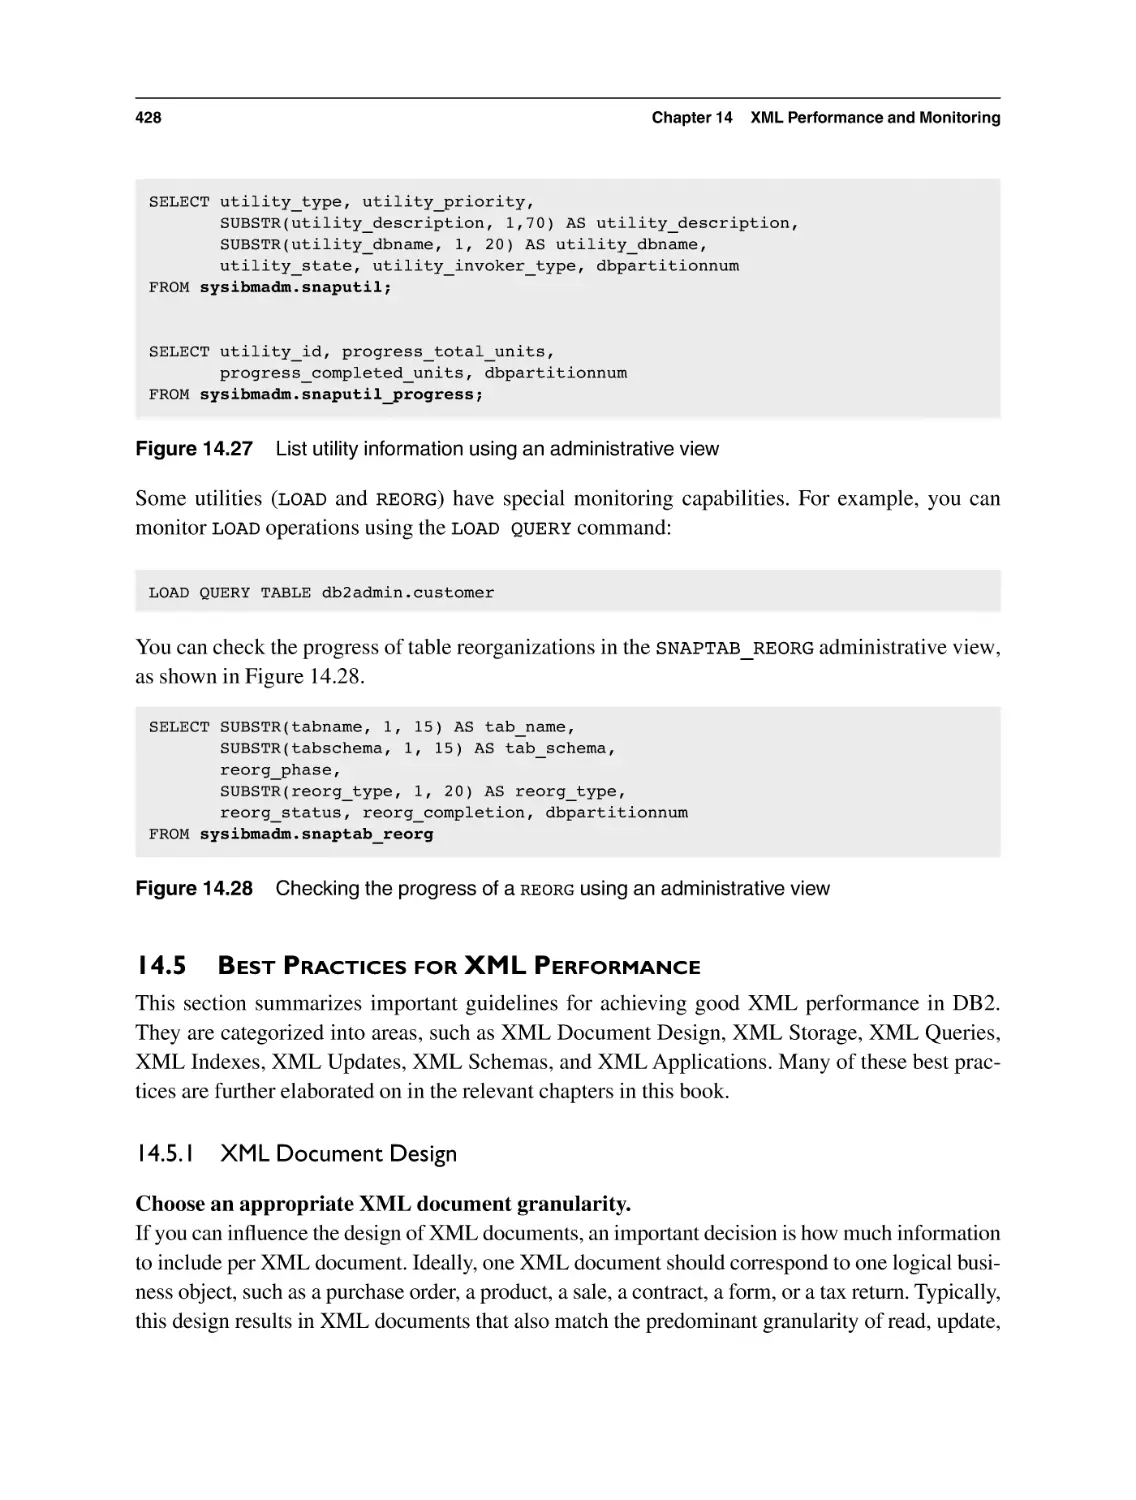 14.5 Best Practices for XML Performance
14.5.1 XML Document Design